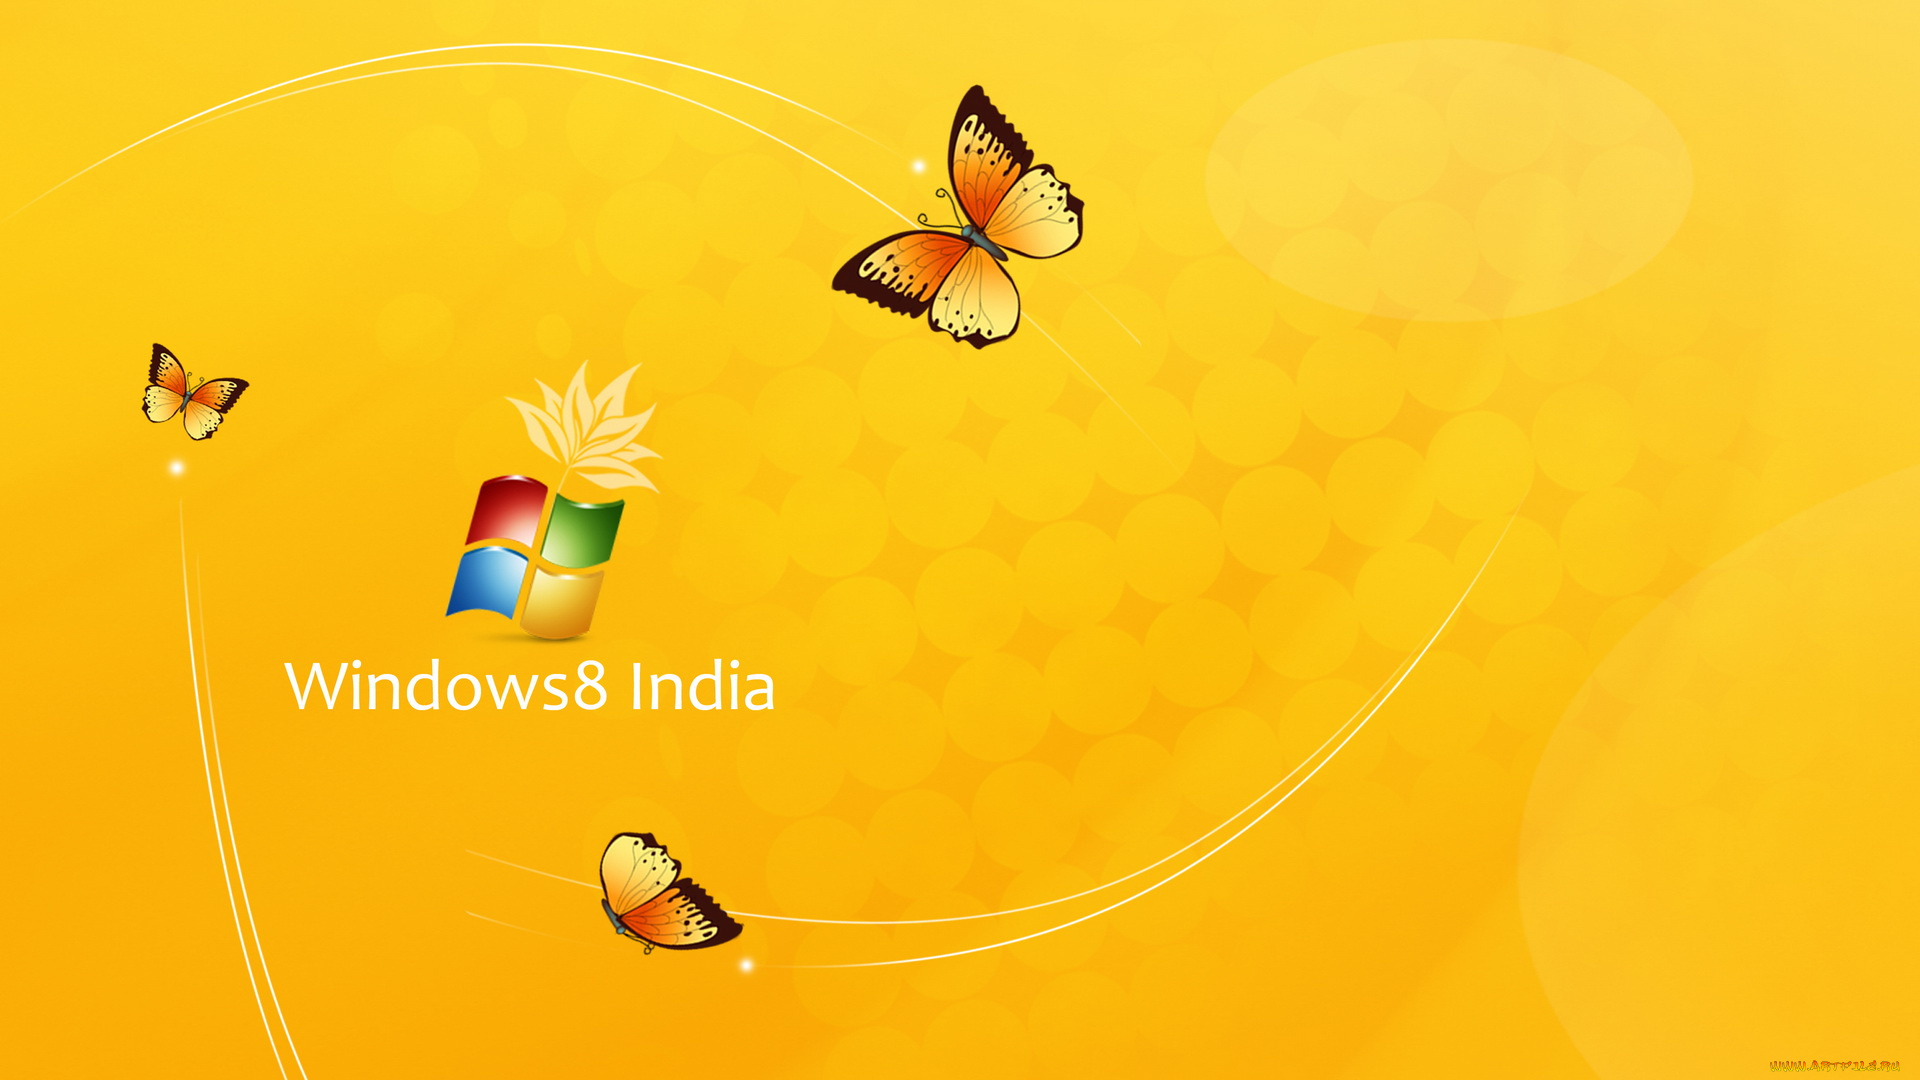 Yellow Windows 8 без смс